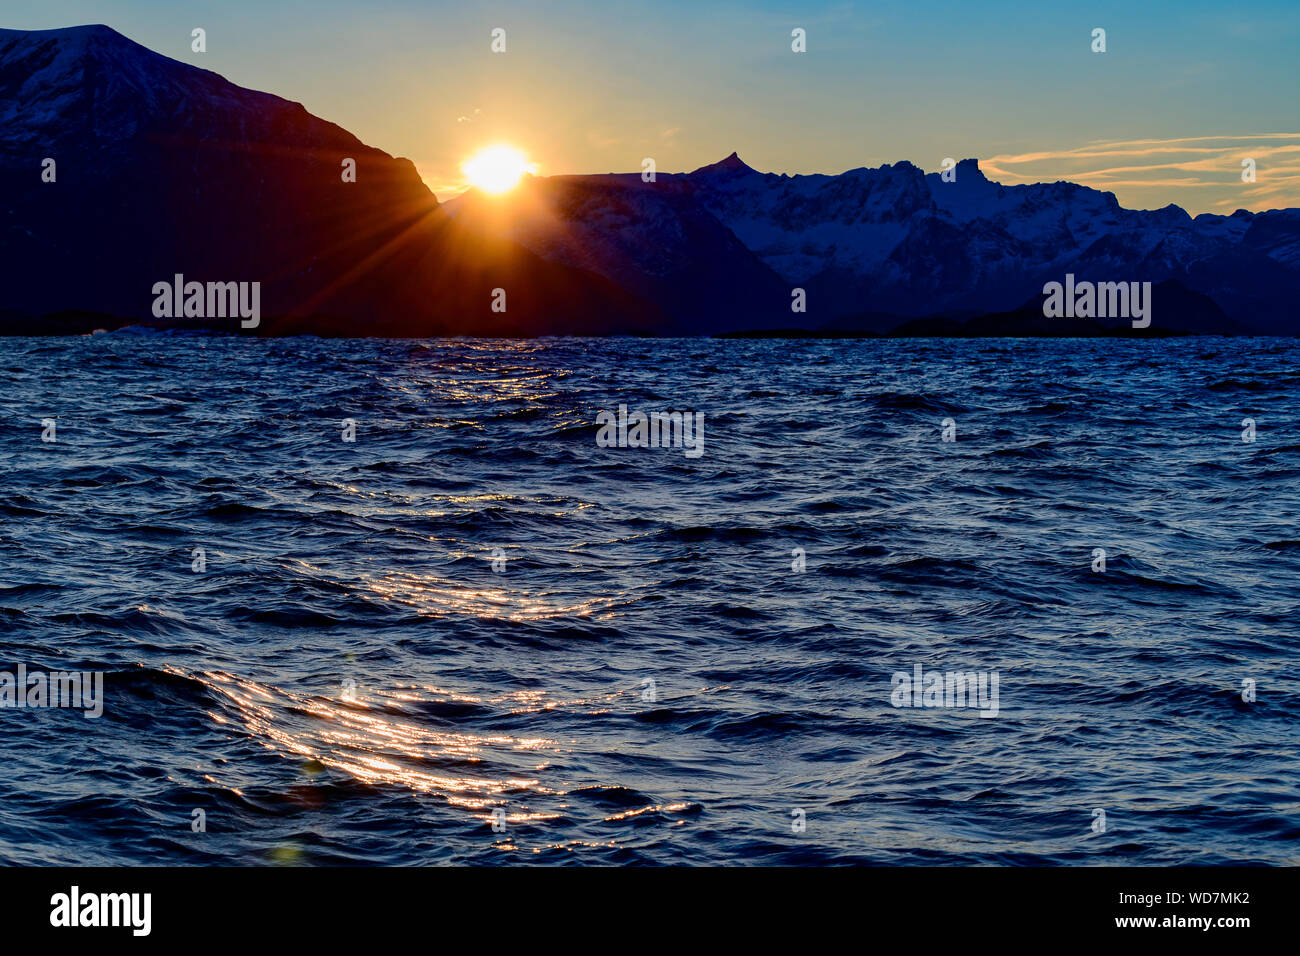 Sunsice on the Sea, Norwegian Atlantic, -, Kvaloyvagen, Norway, Atlantic Ocean Stock Photo